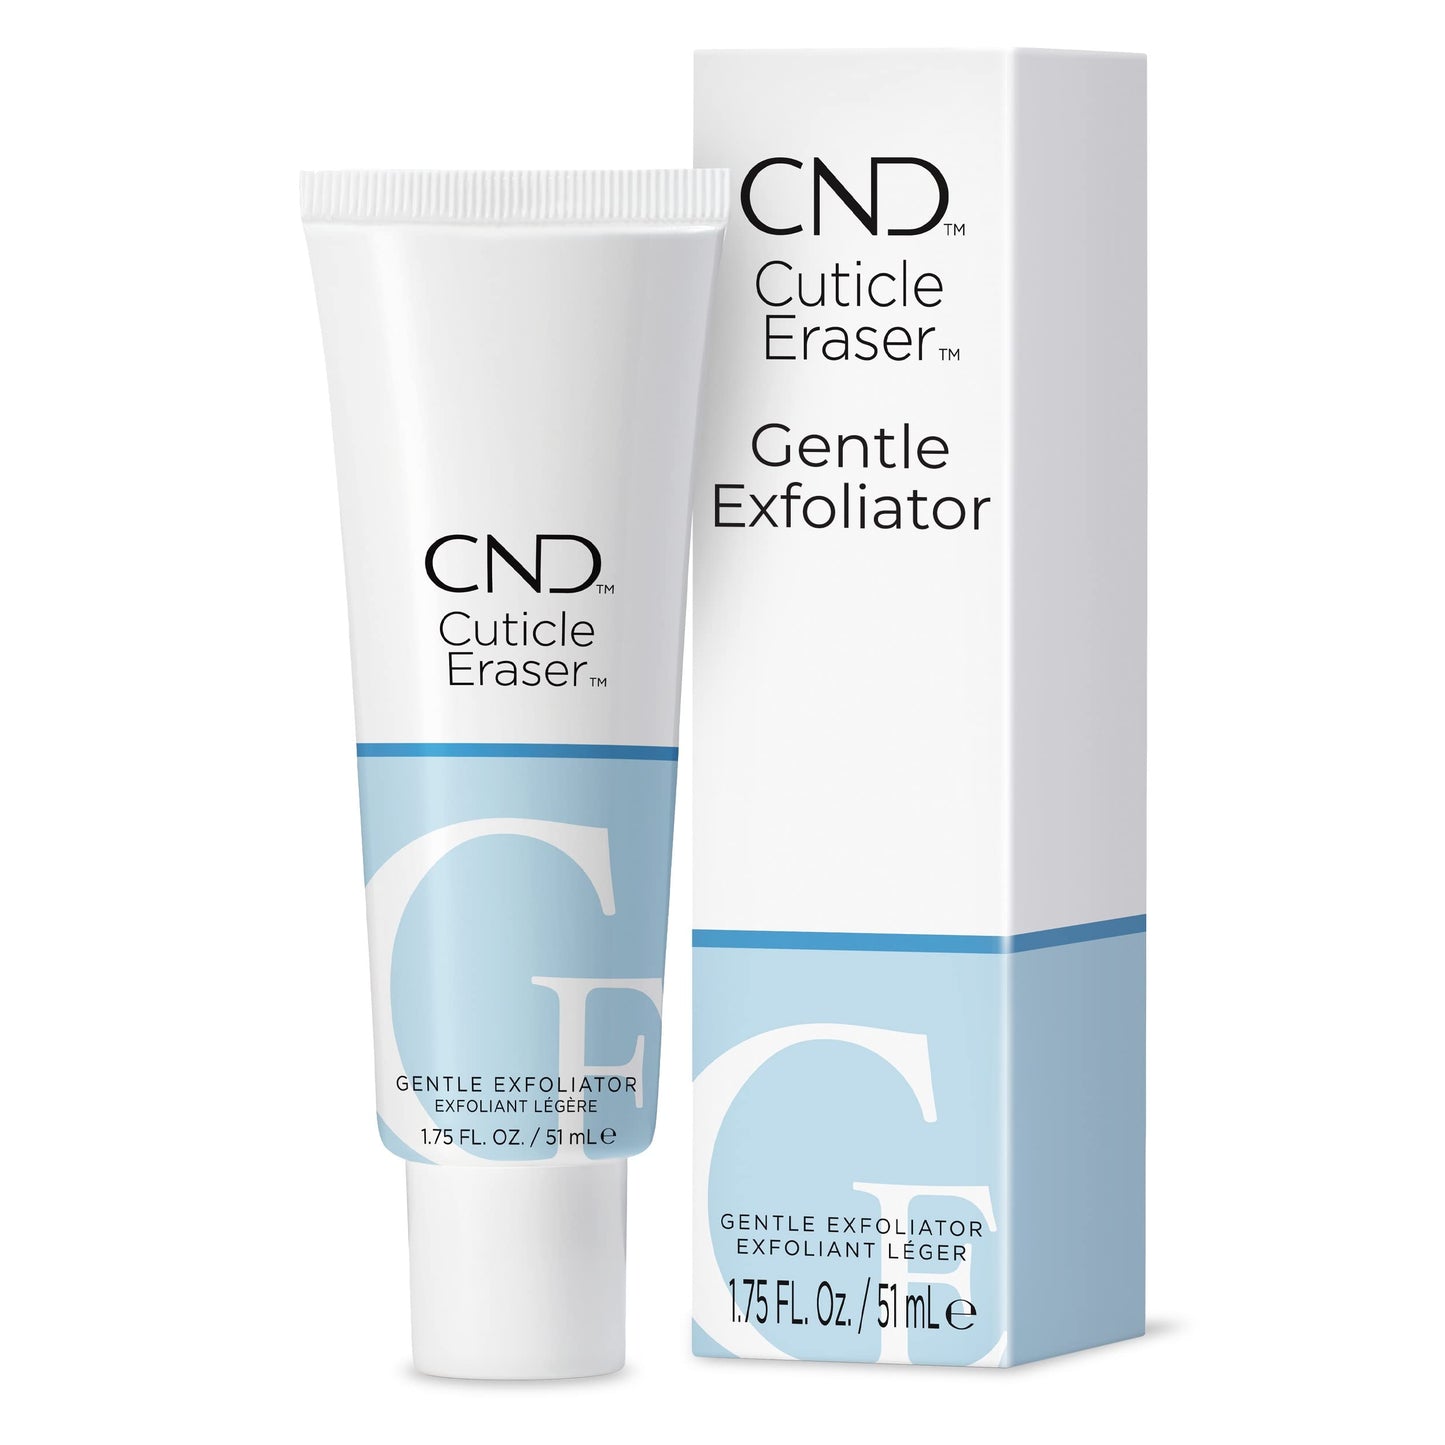 CND Cuticle Eraser Gentle Exfoliator for Women 0.5 oz